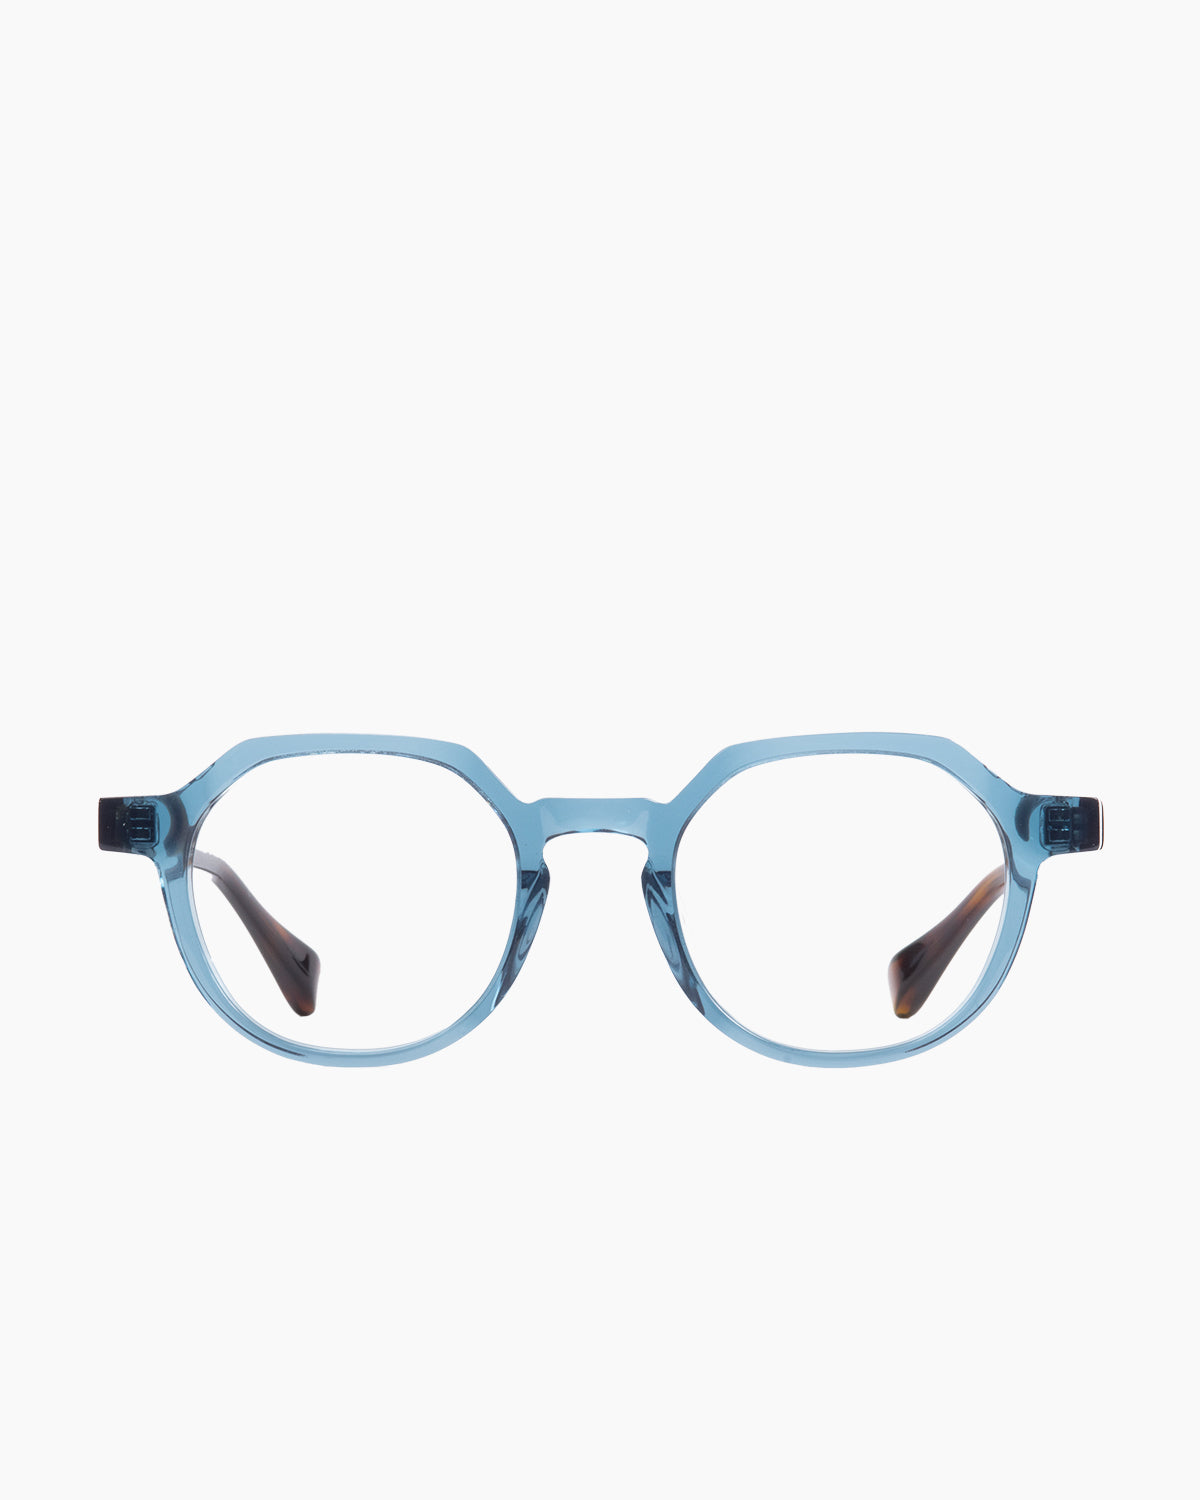 Francois Pinton - Haussmann9af - Bz | glasses bar